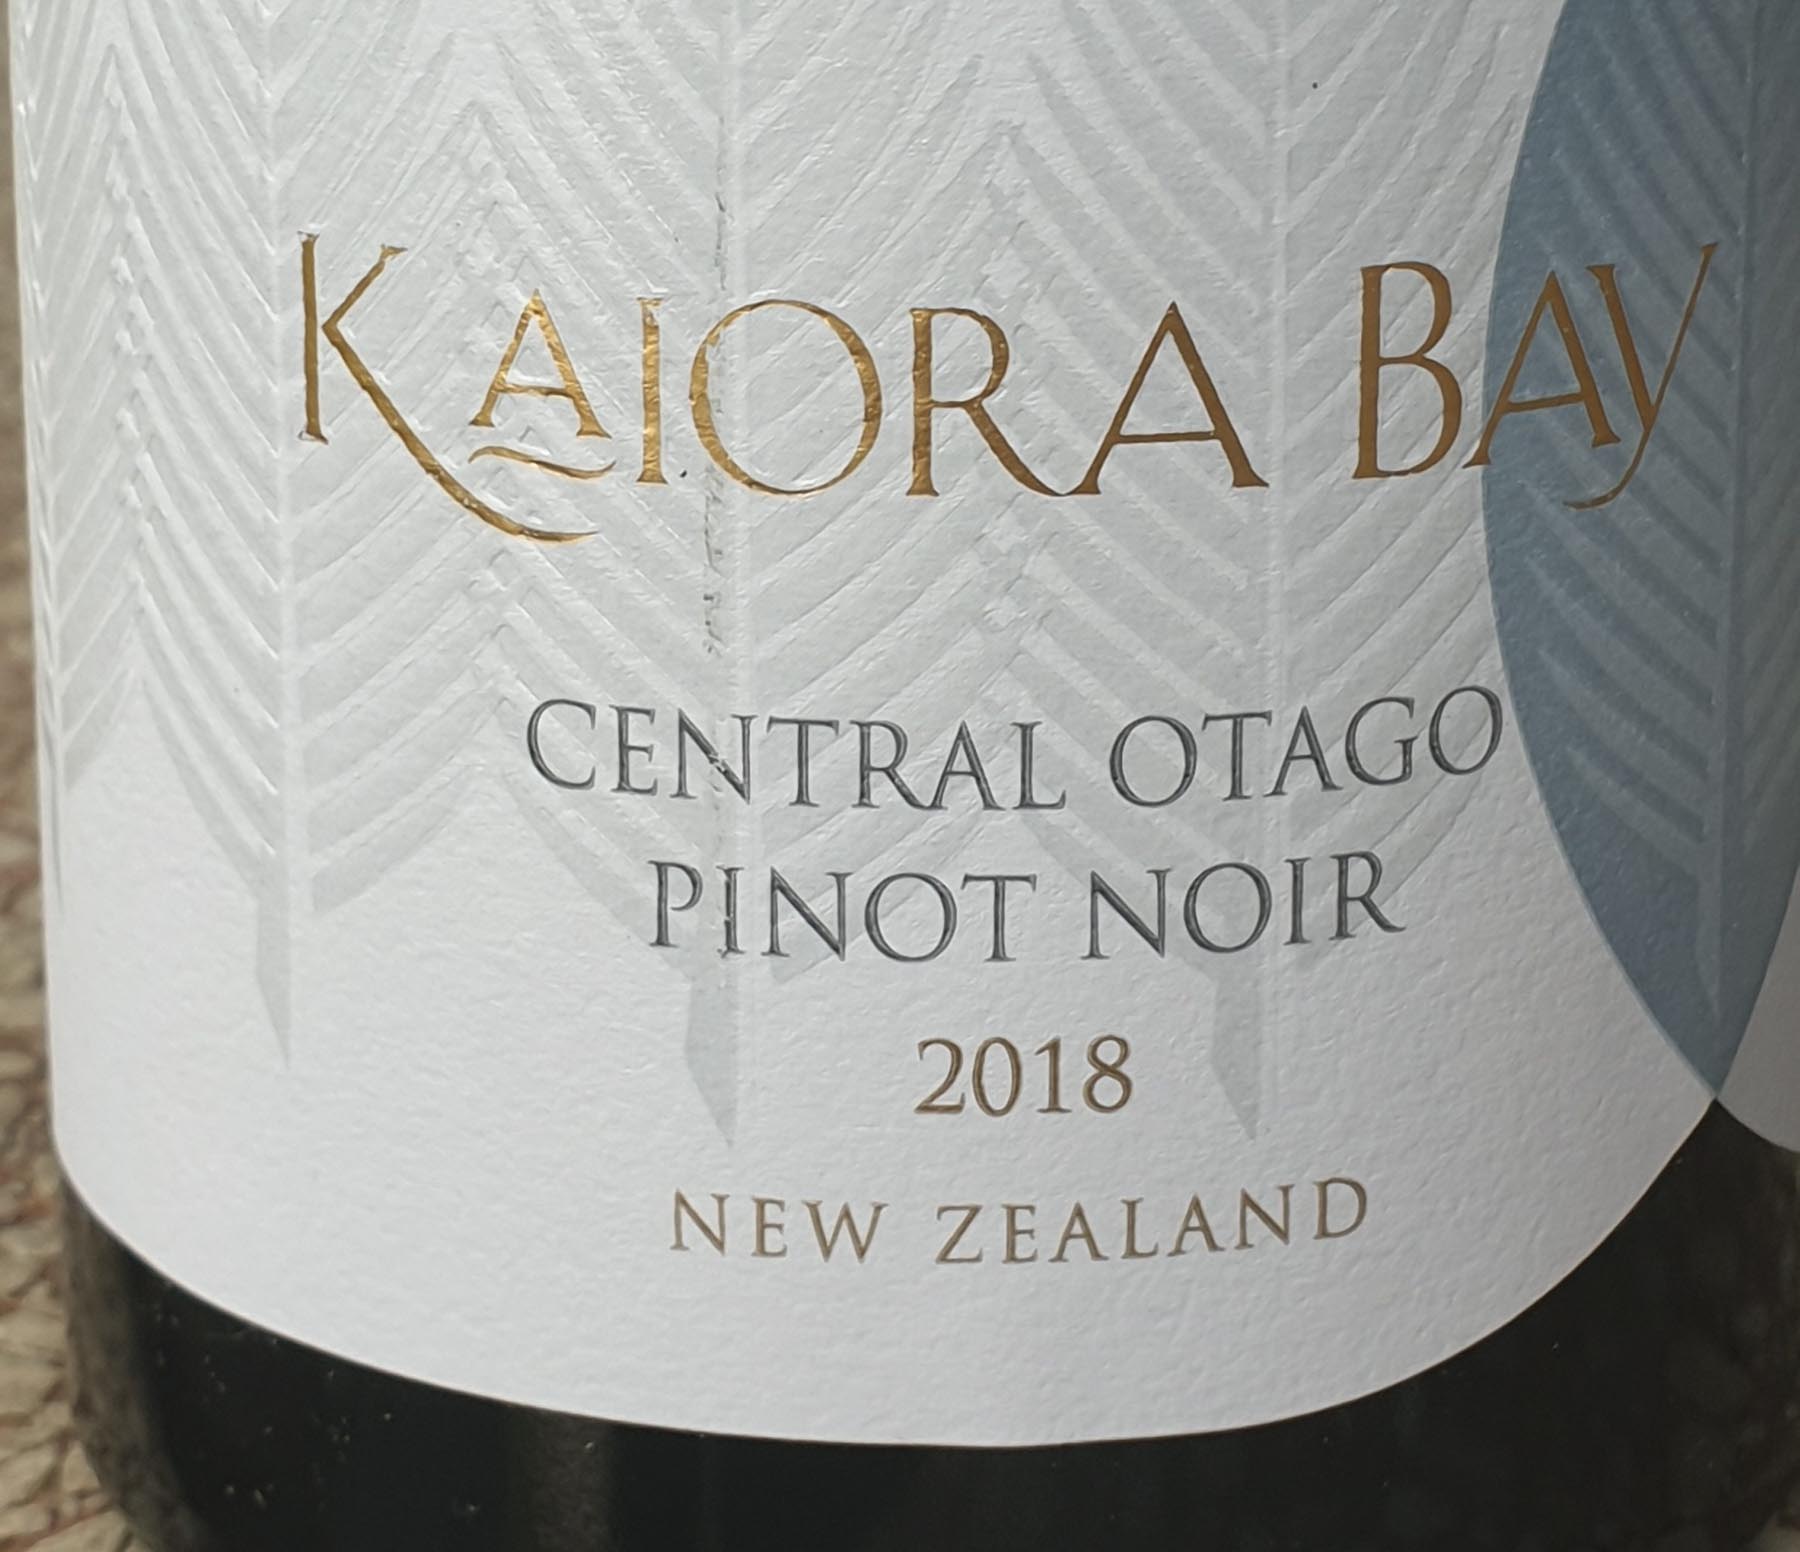 Kaiora Bay Reserve Central Otago Pinot Noir 2018 –